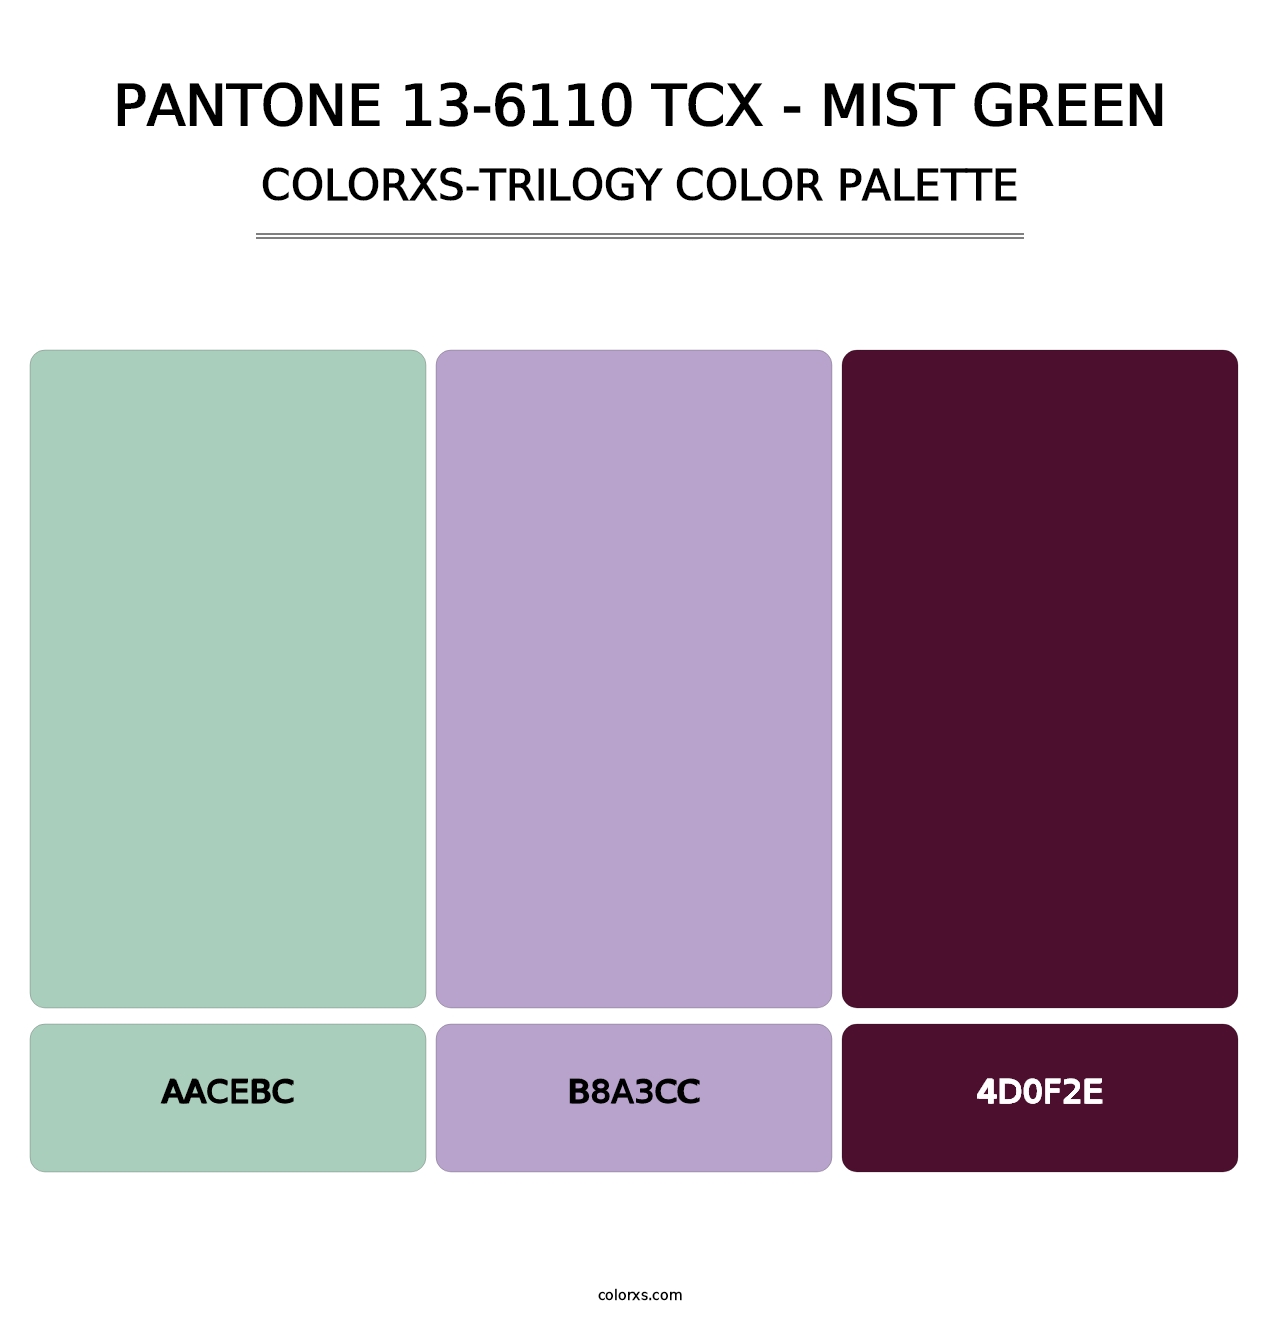 PANTONE 13-6110 TCX - Mist Green - Colorxs Trilogy Palette